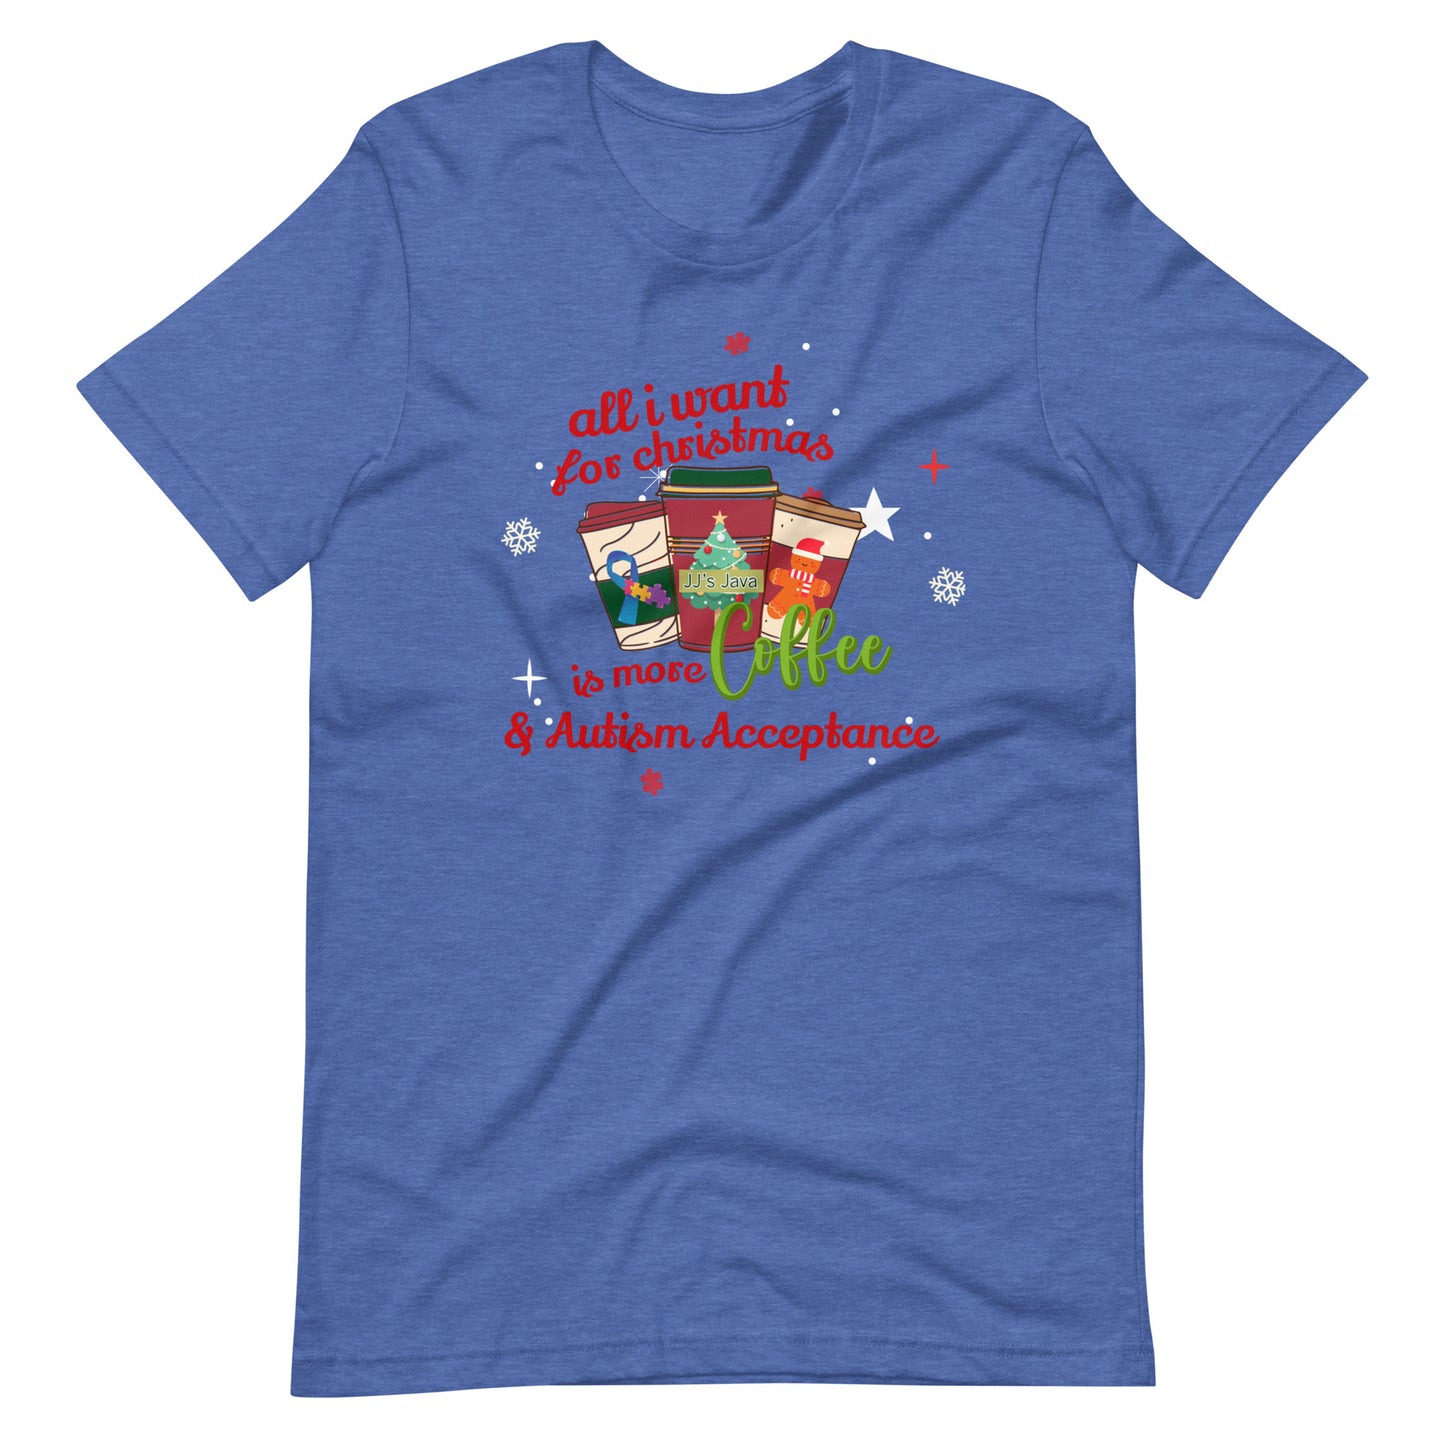 JJ's Java Holiday unisex t-shirt